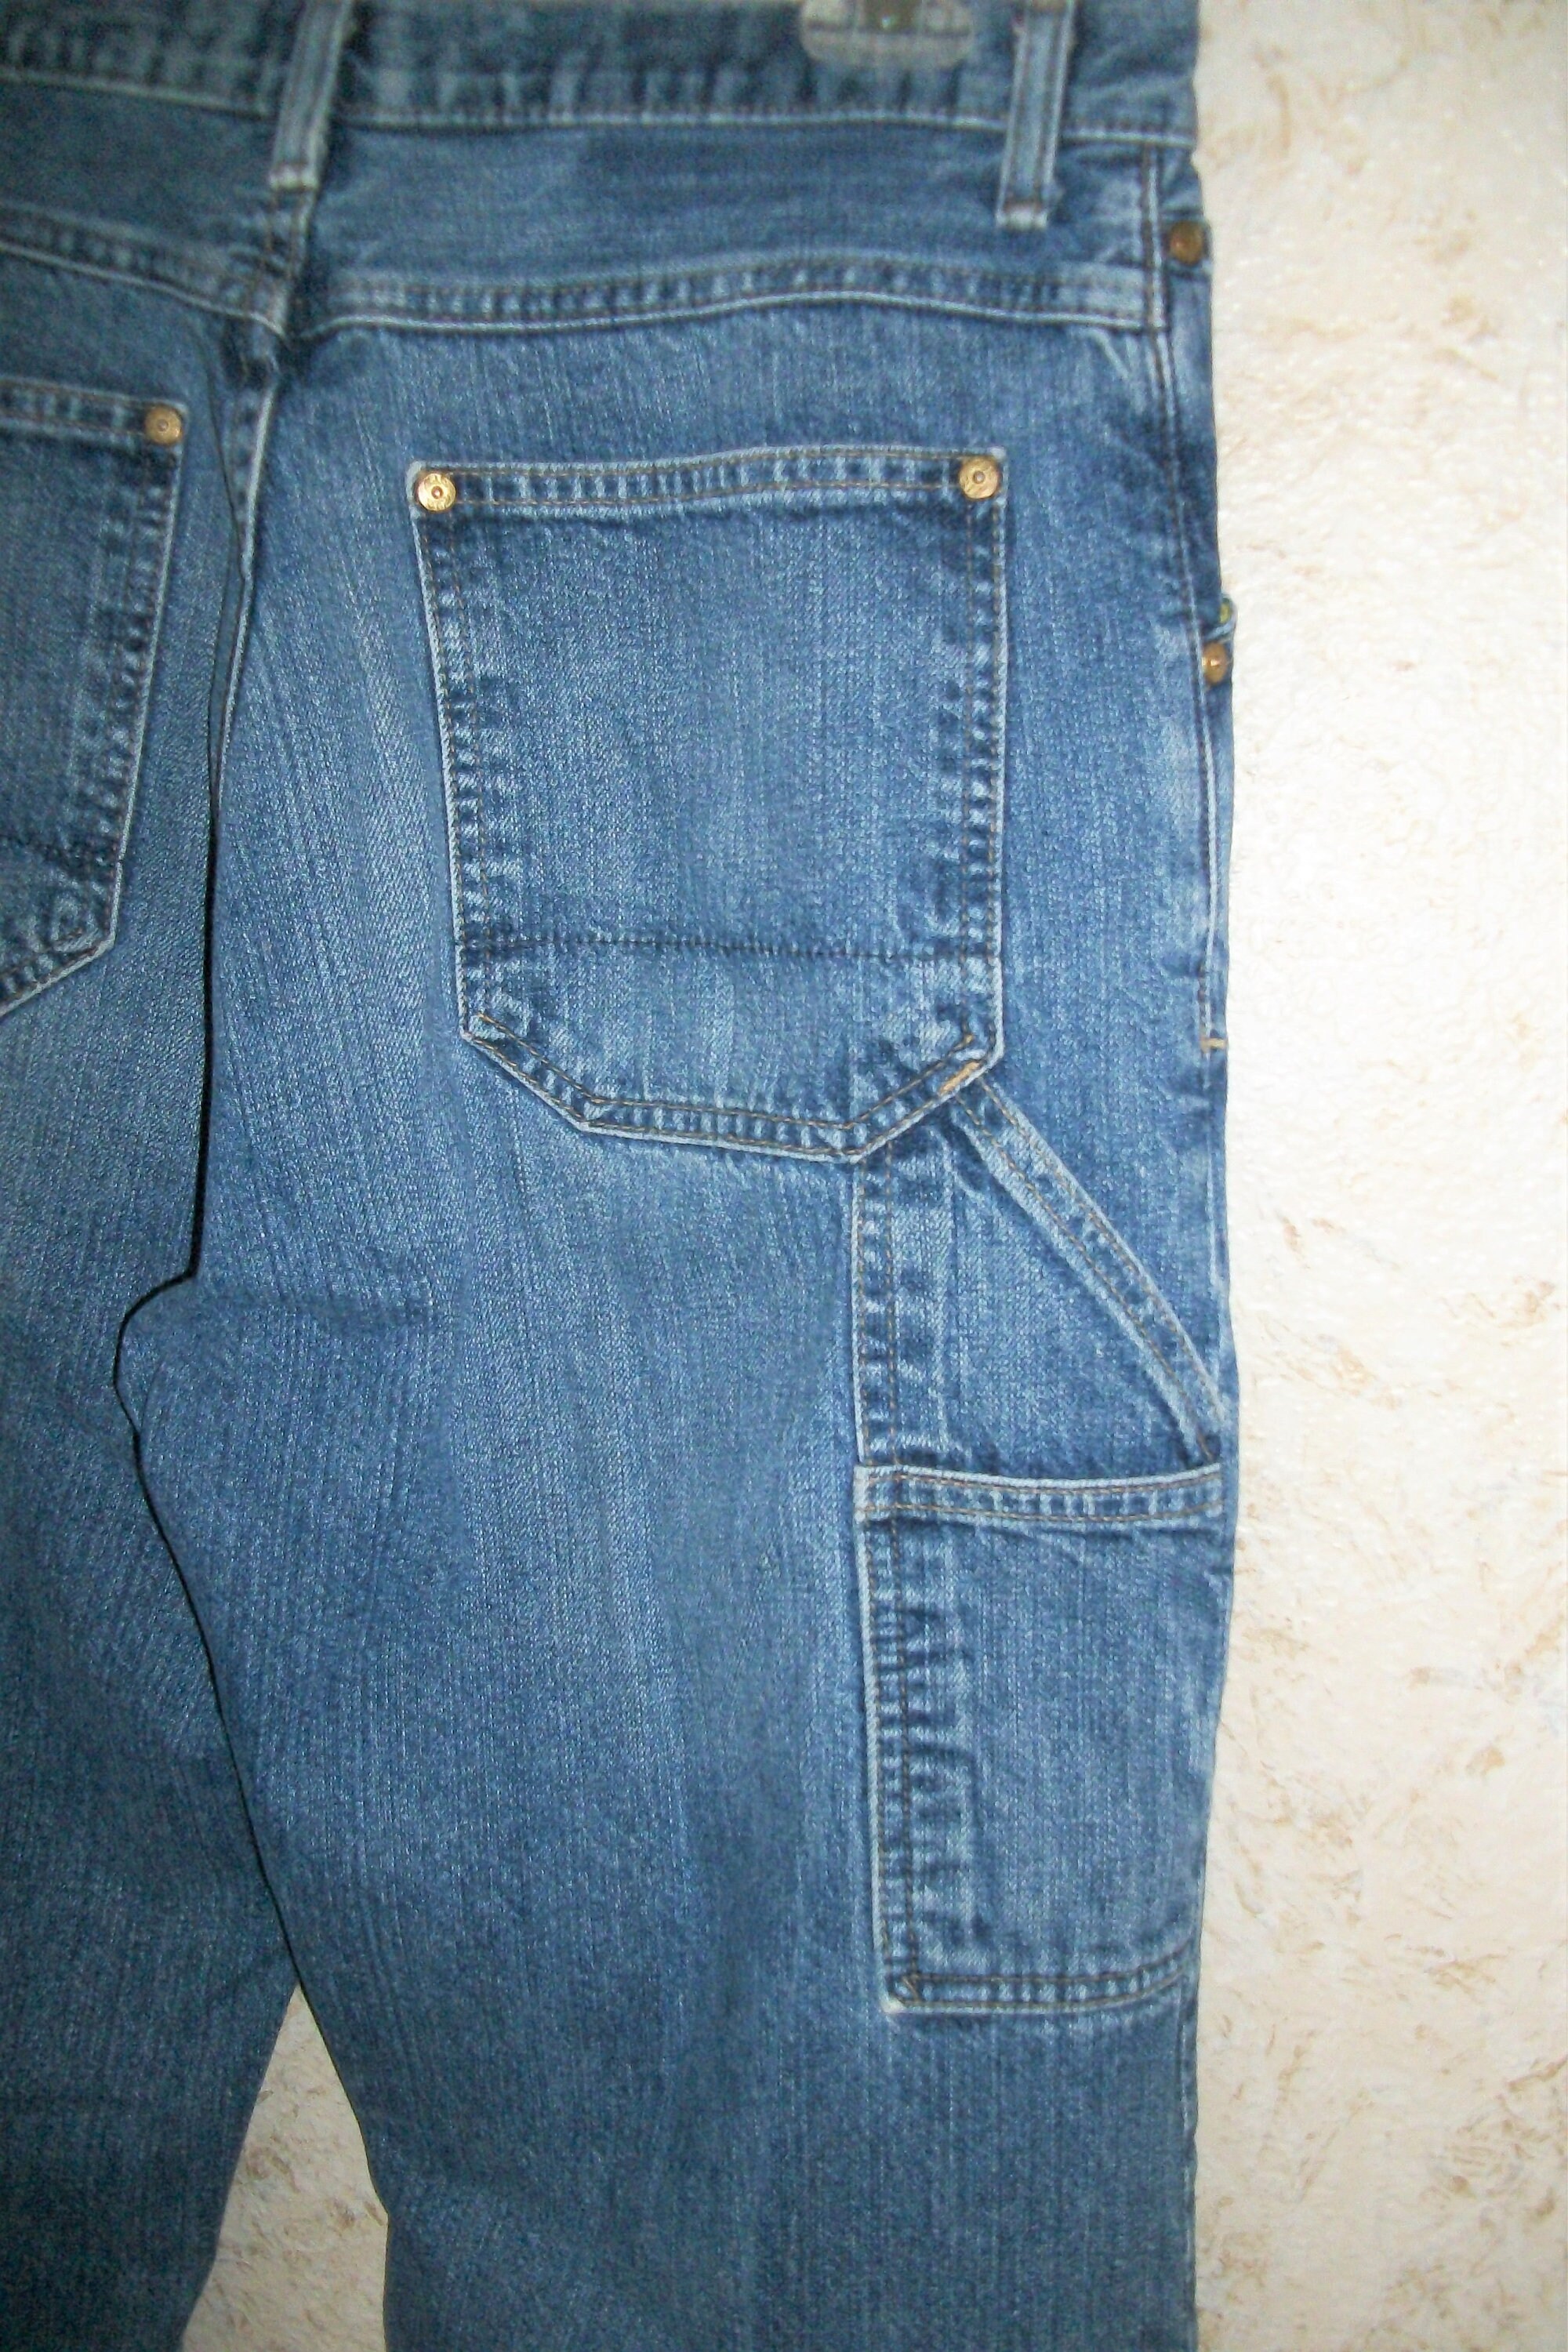 NAUTICA Carpenter Jeans Blue Denim Vintage Hipster Denim 5 | Etsy